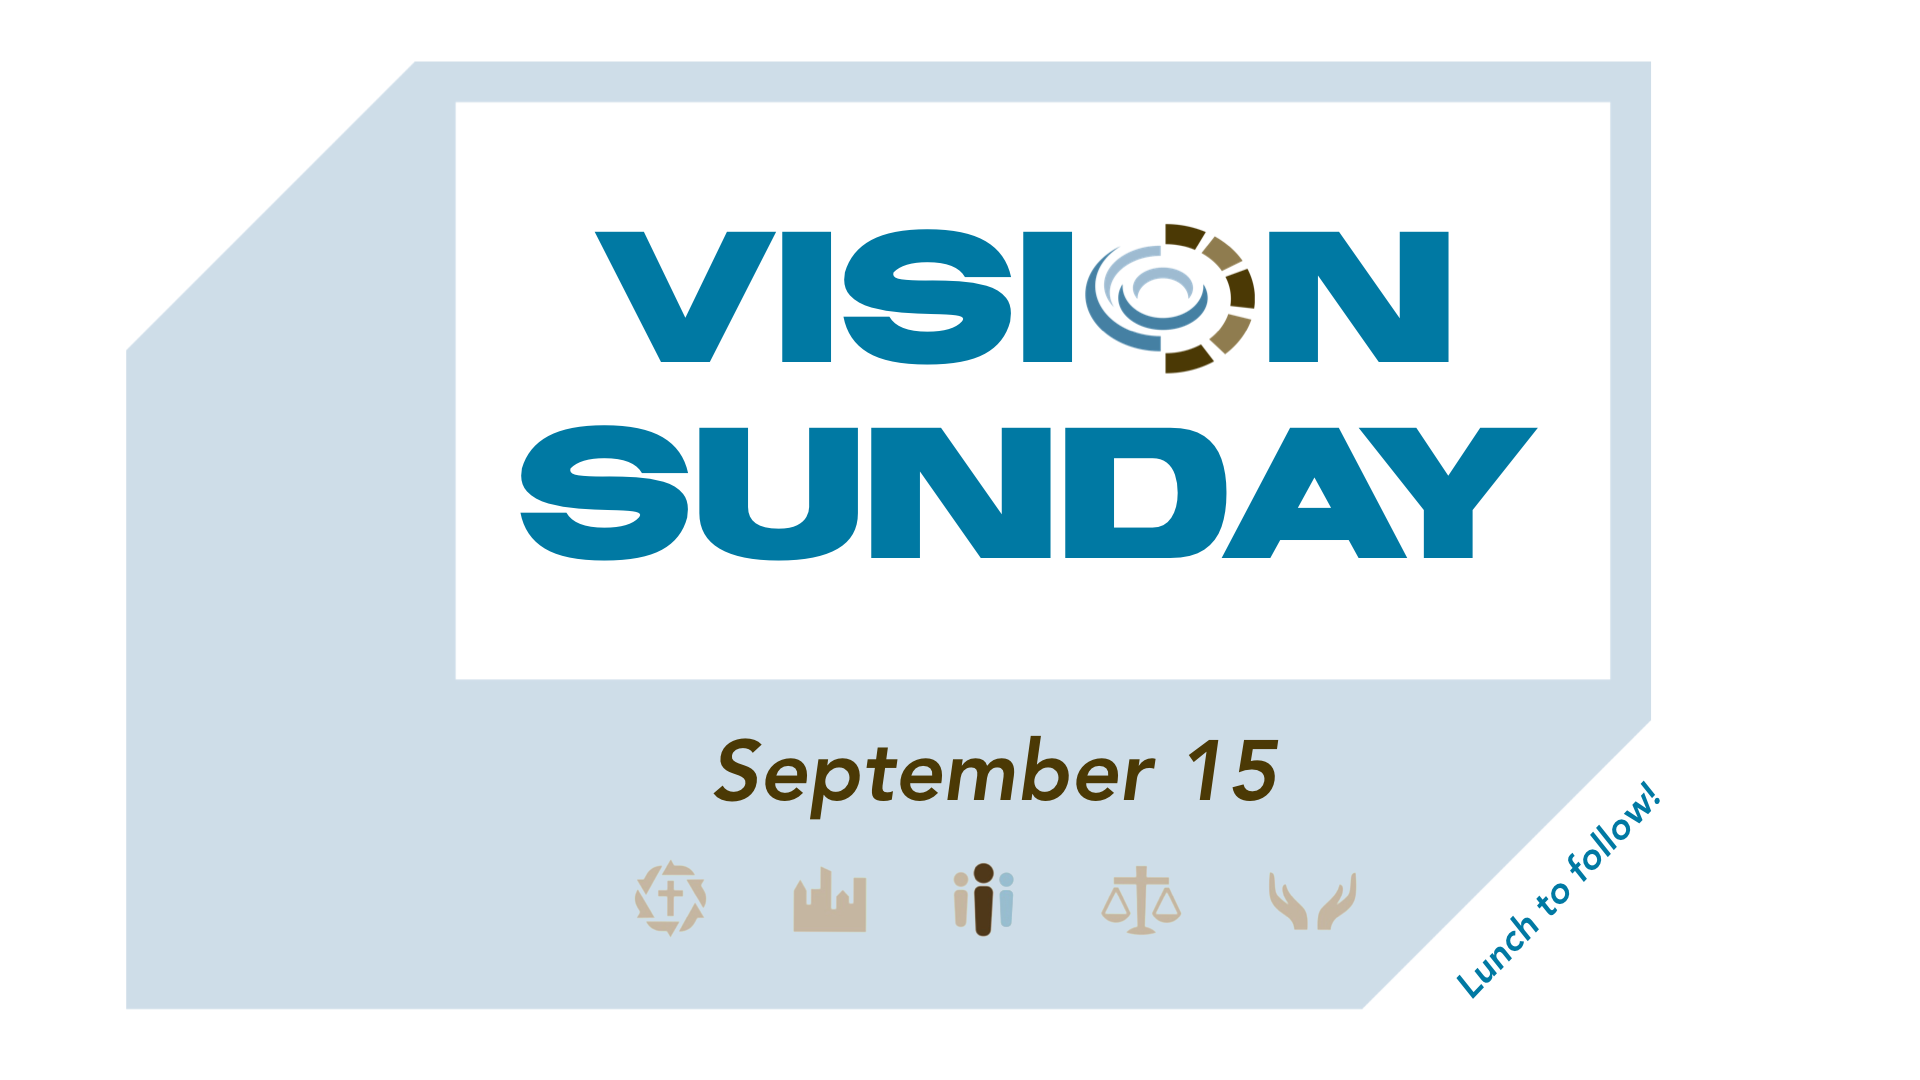 Vision Sunday 2019 banner